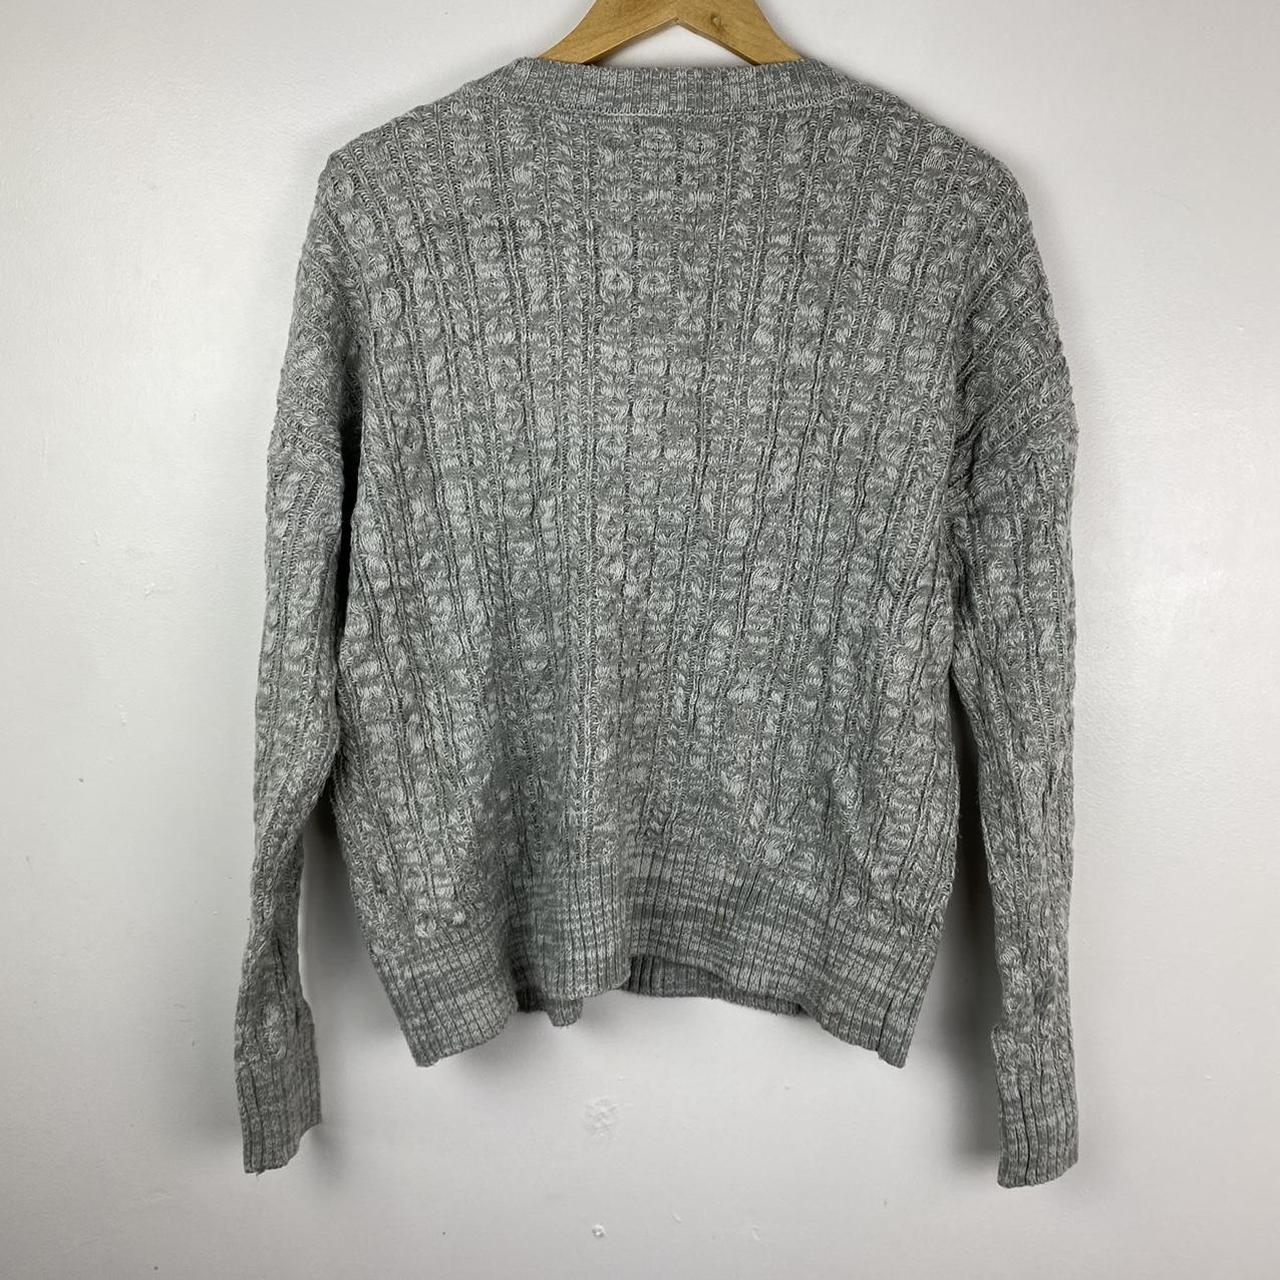 Atmosphere Knitted Sweatshirt Grey Sweater Warm... - Depop